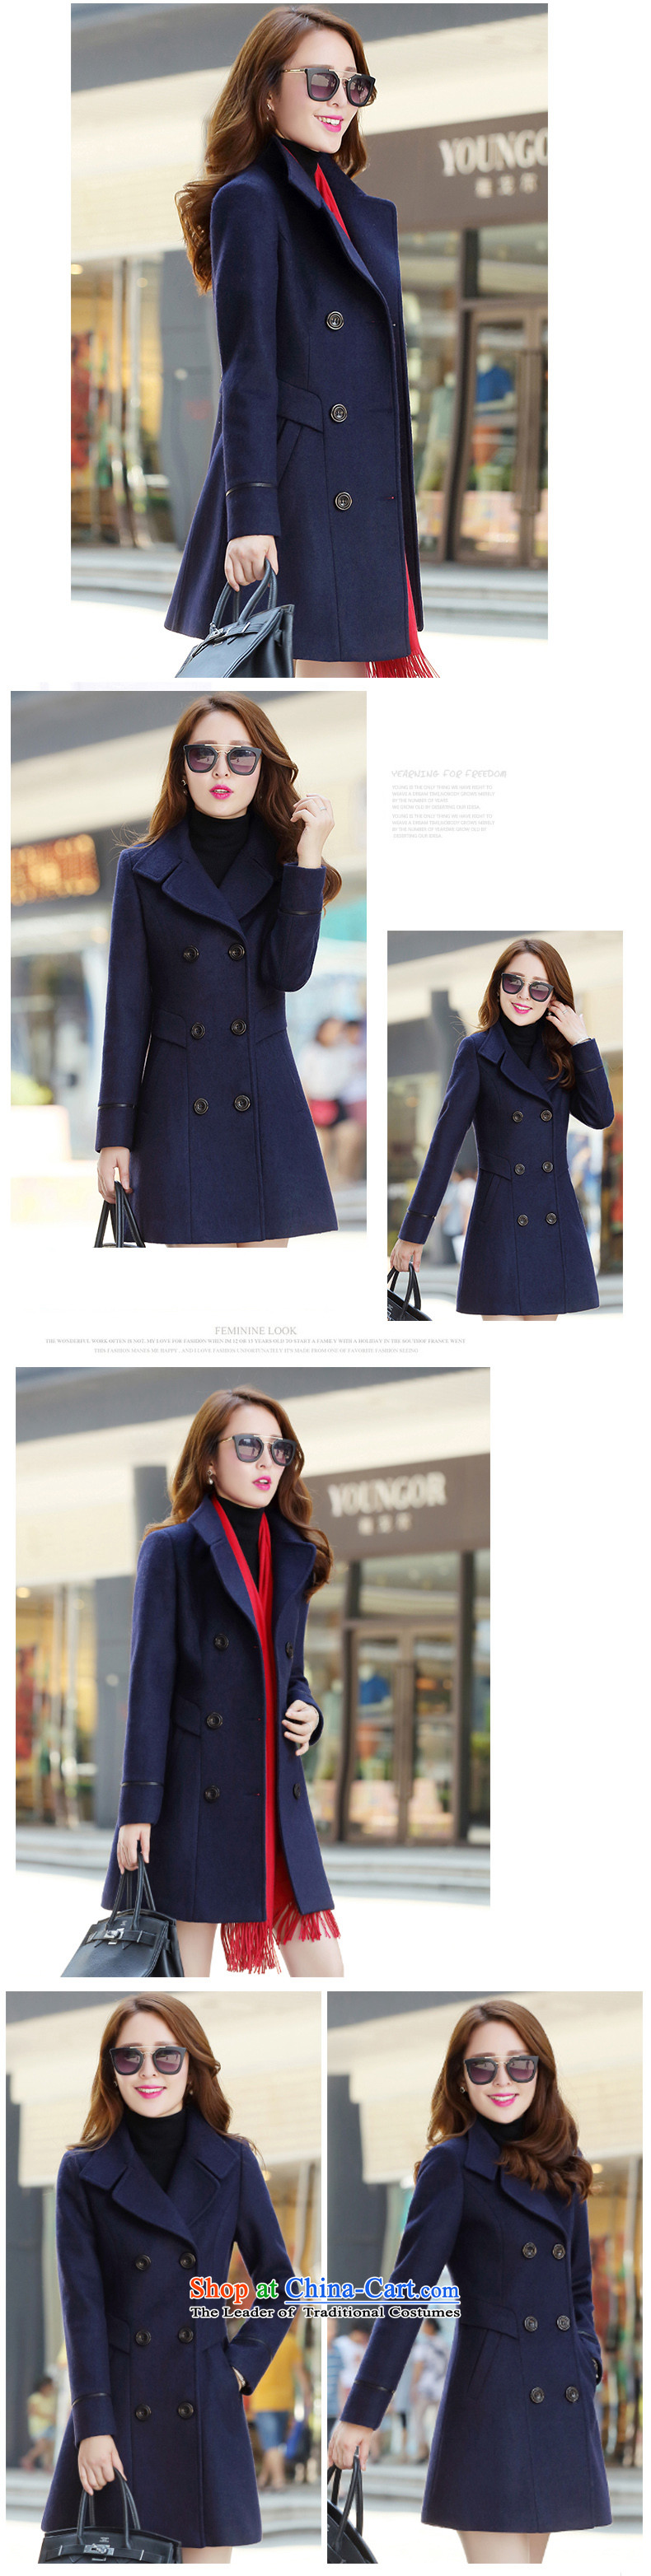 Ben Nga optimized 2015 autumn and winter coats female Korean gross? 